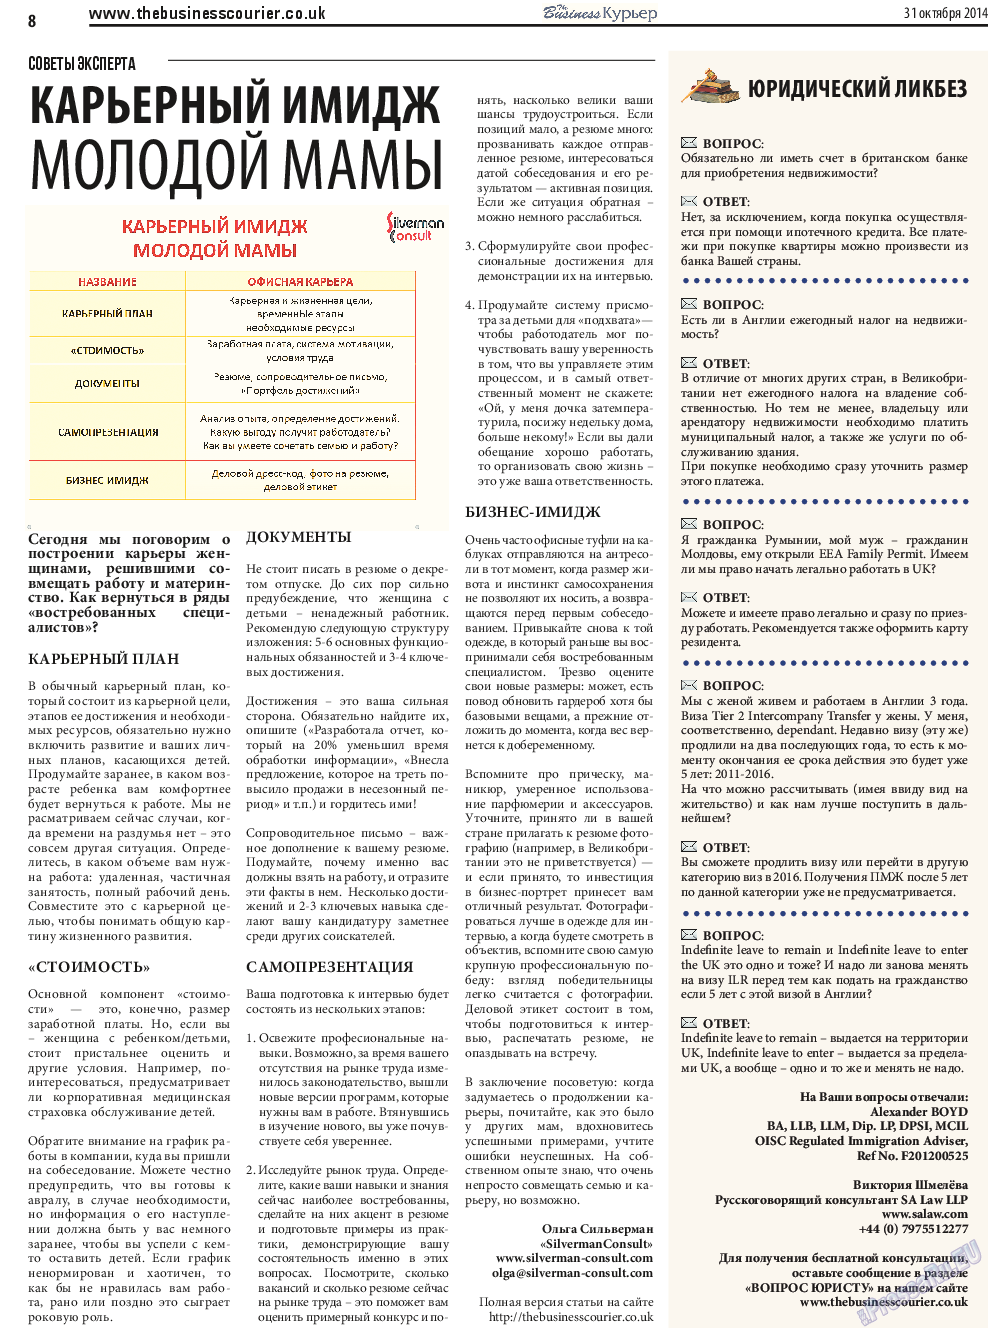 The Business Курьер, газета. 2014 №26 стр.8